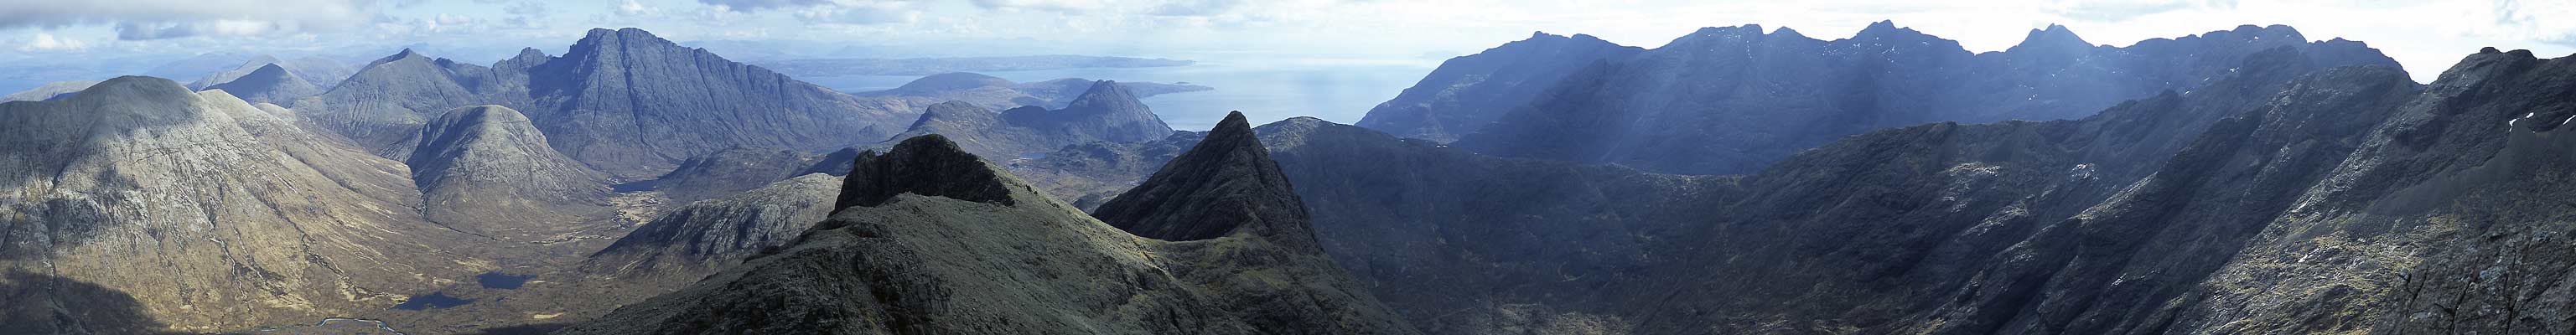 The Skye Cuillin viewed from the SE ridge of Sgurr nan Gillean